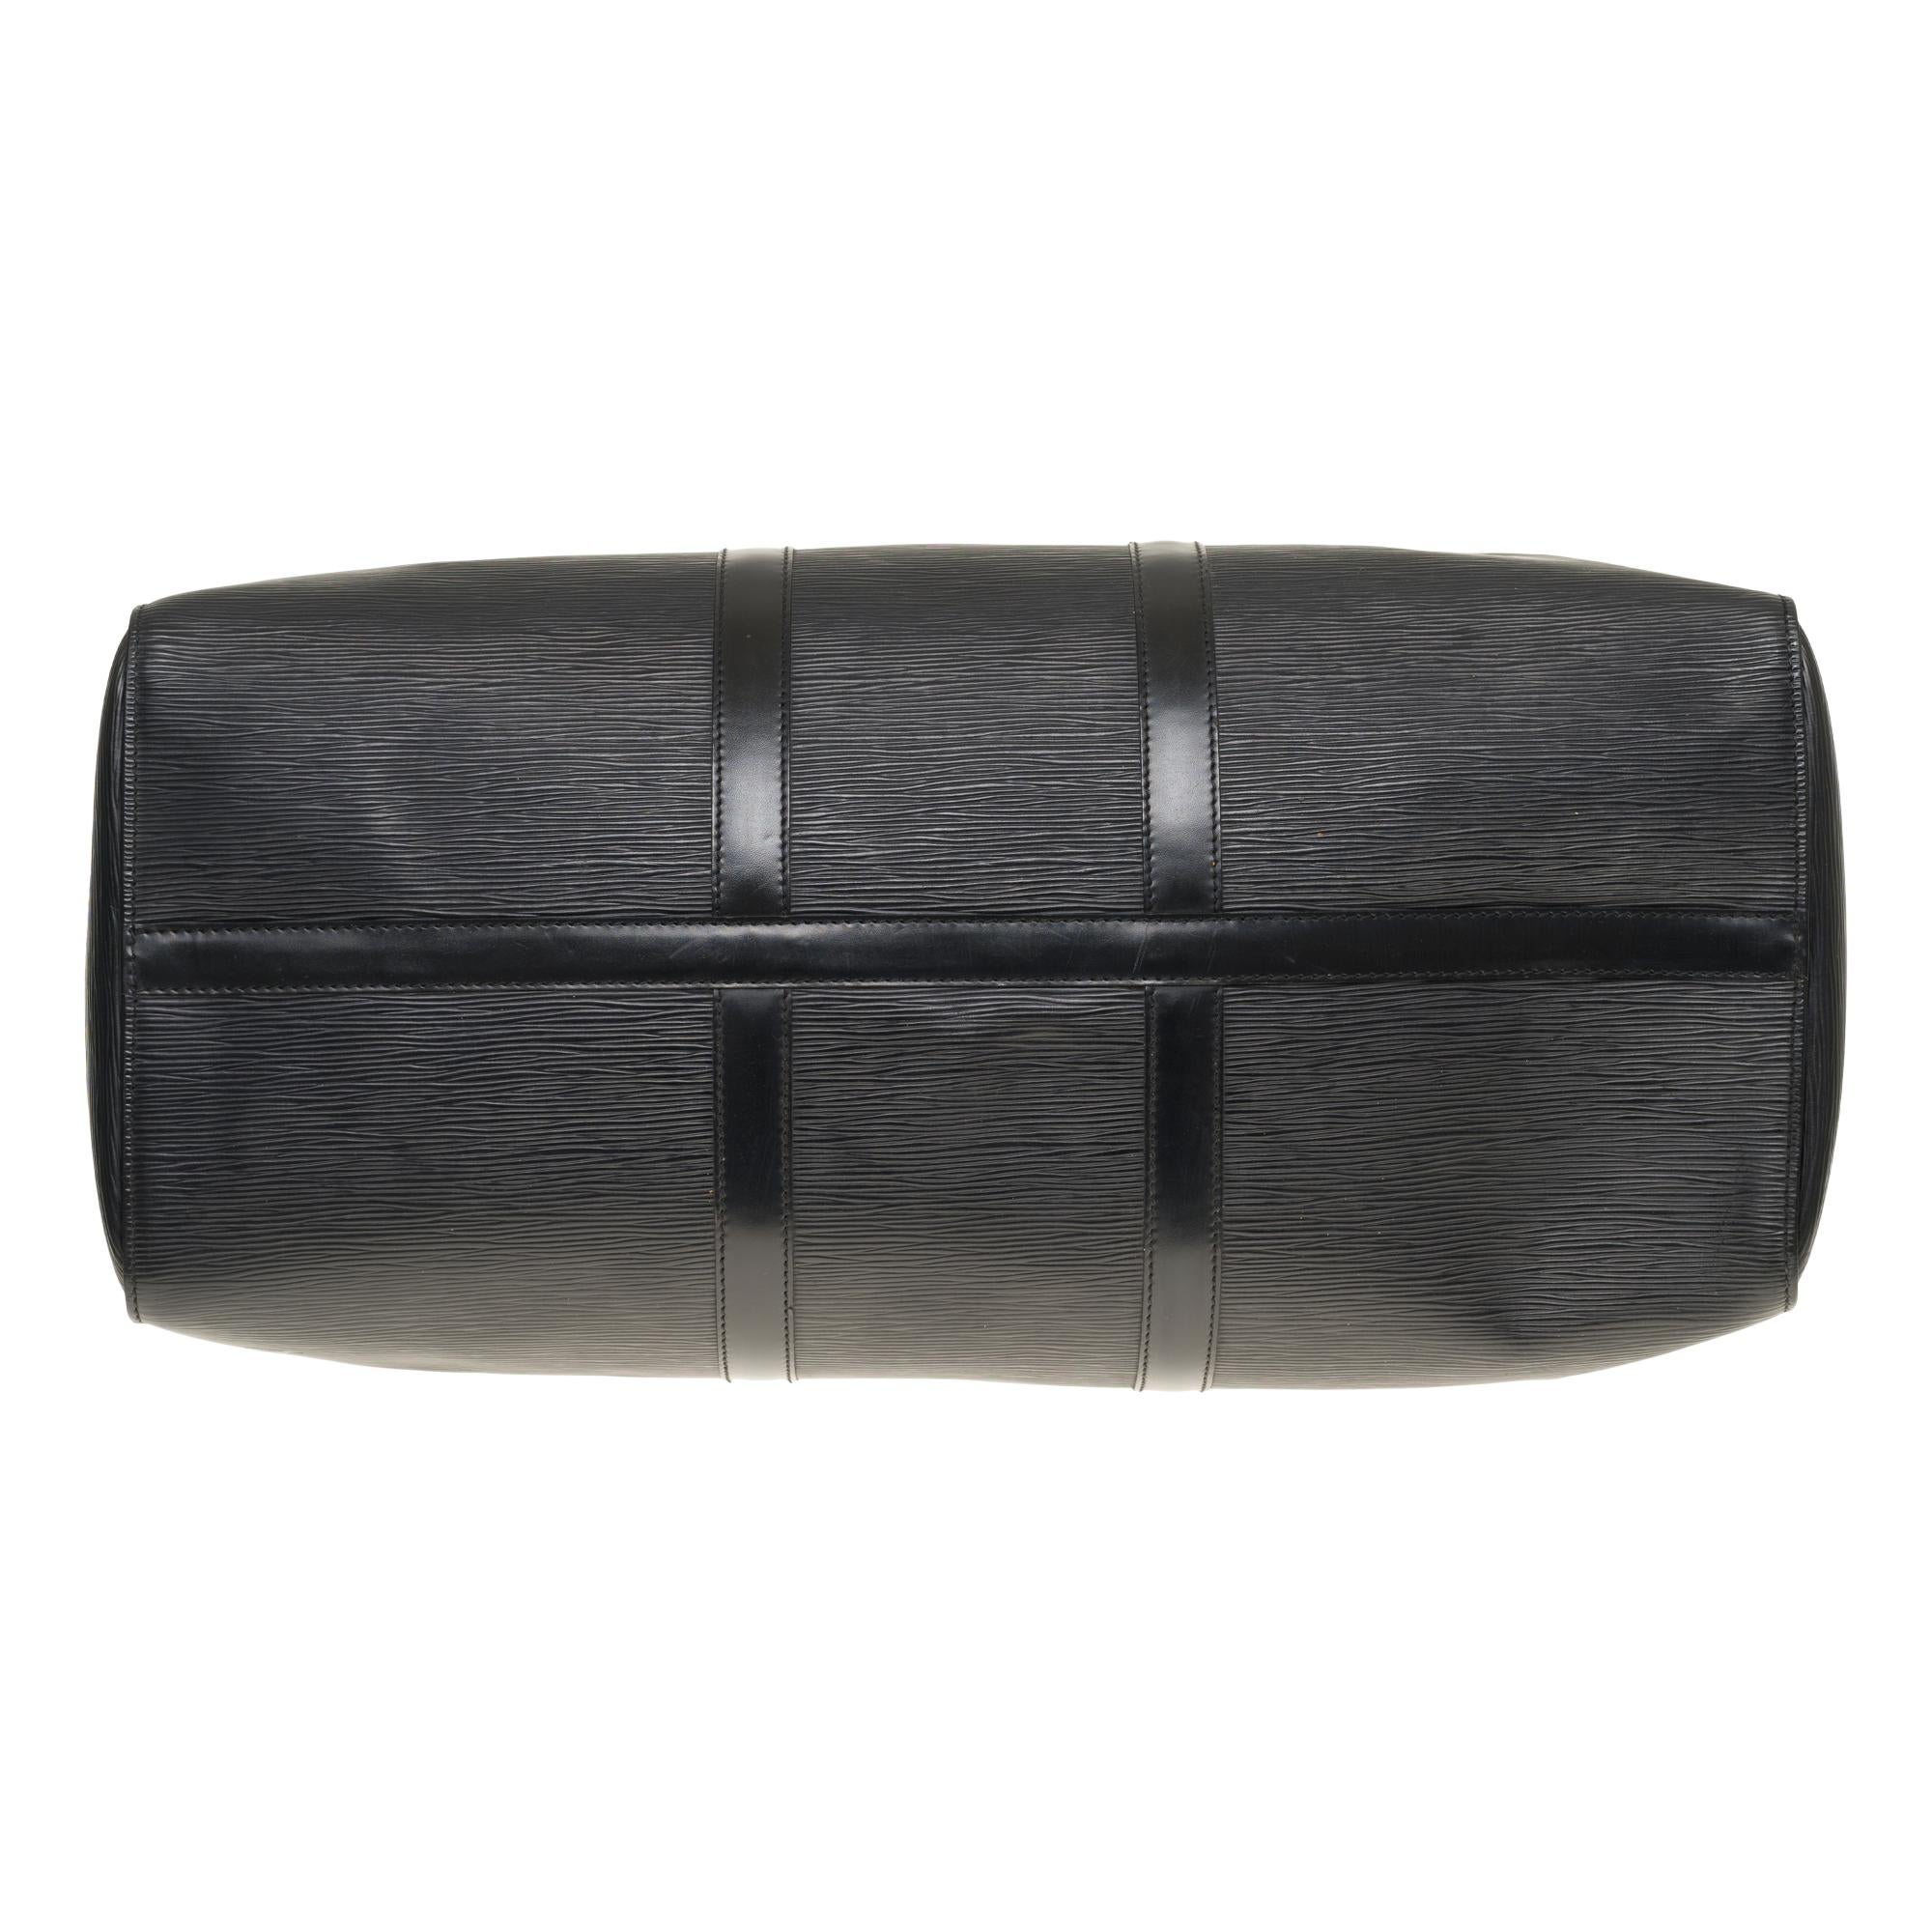 Louis Vuitton Keepall 50 Travel bag in black épi leather 4